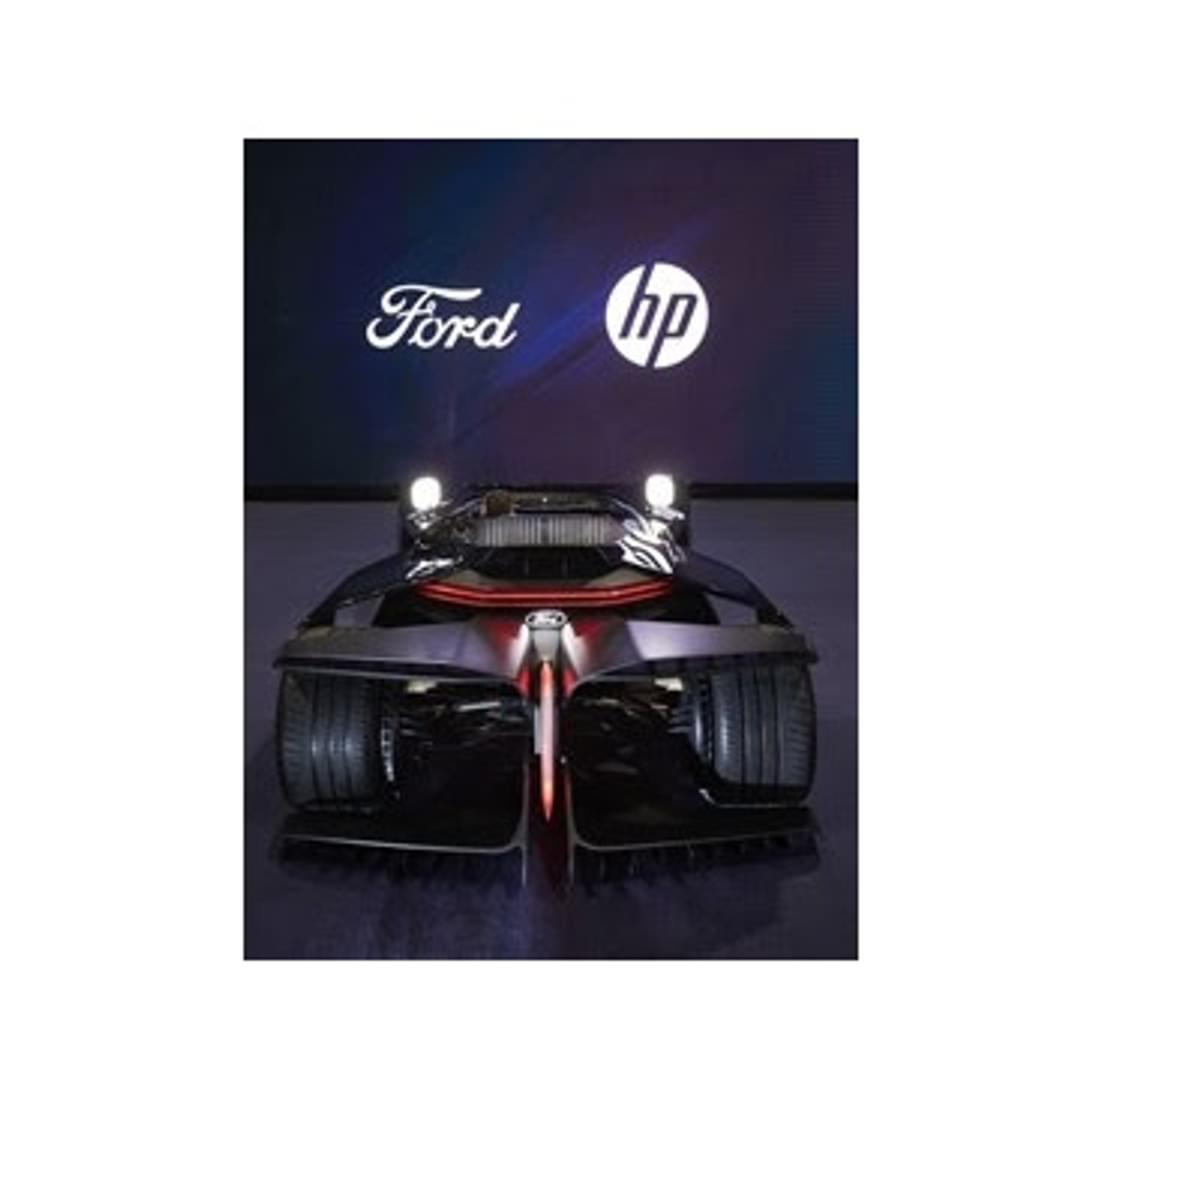 Ford en HP ontwikkelen Team Fordzilla F1-model simracing race auto image